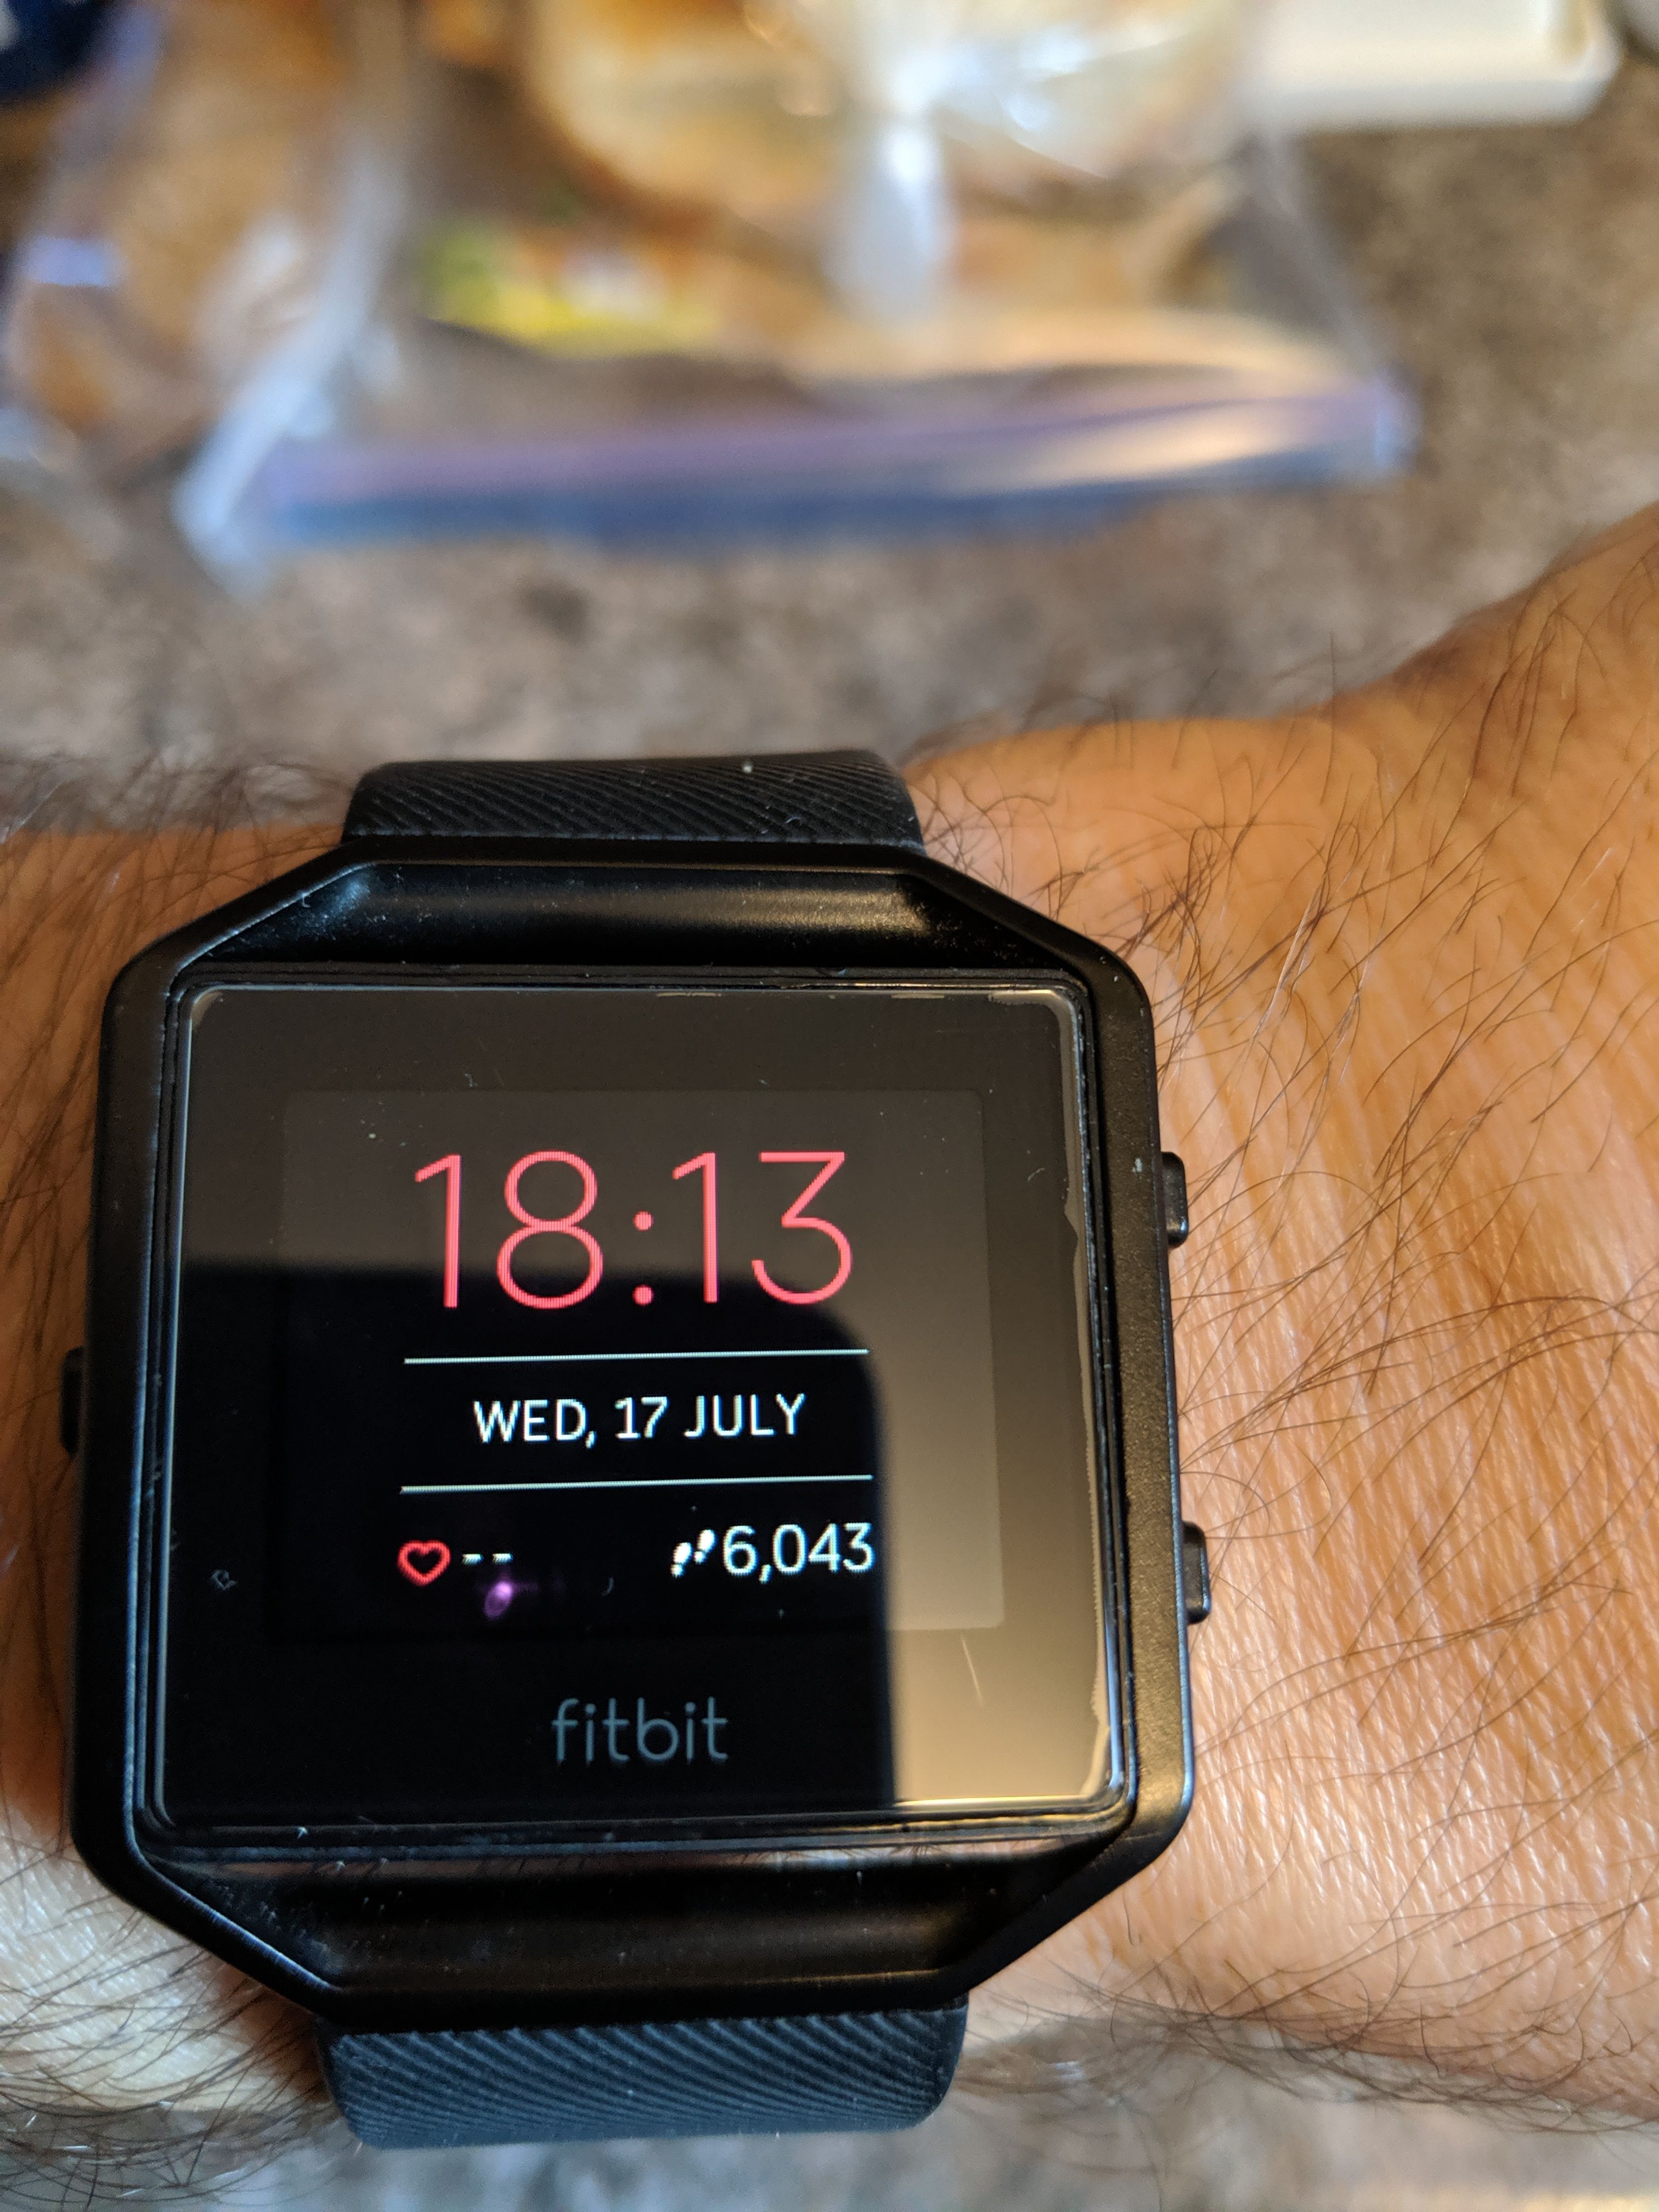 FitBit Blaze Heart Rate Monitor not 